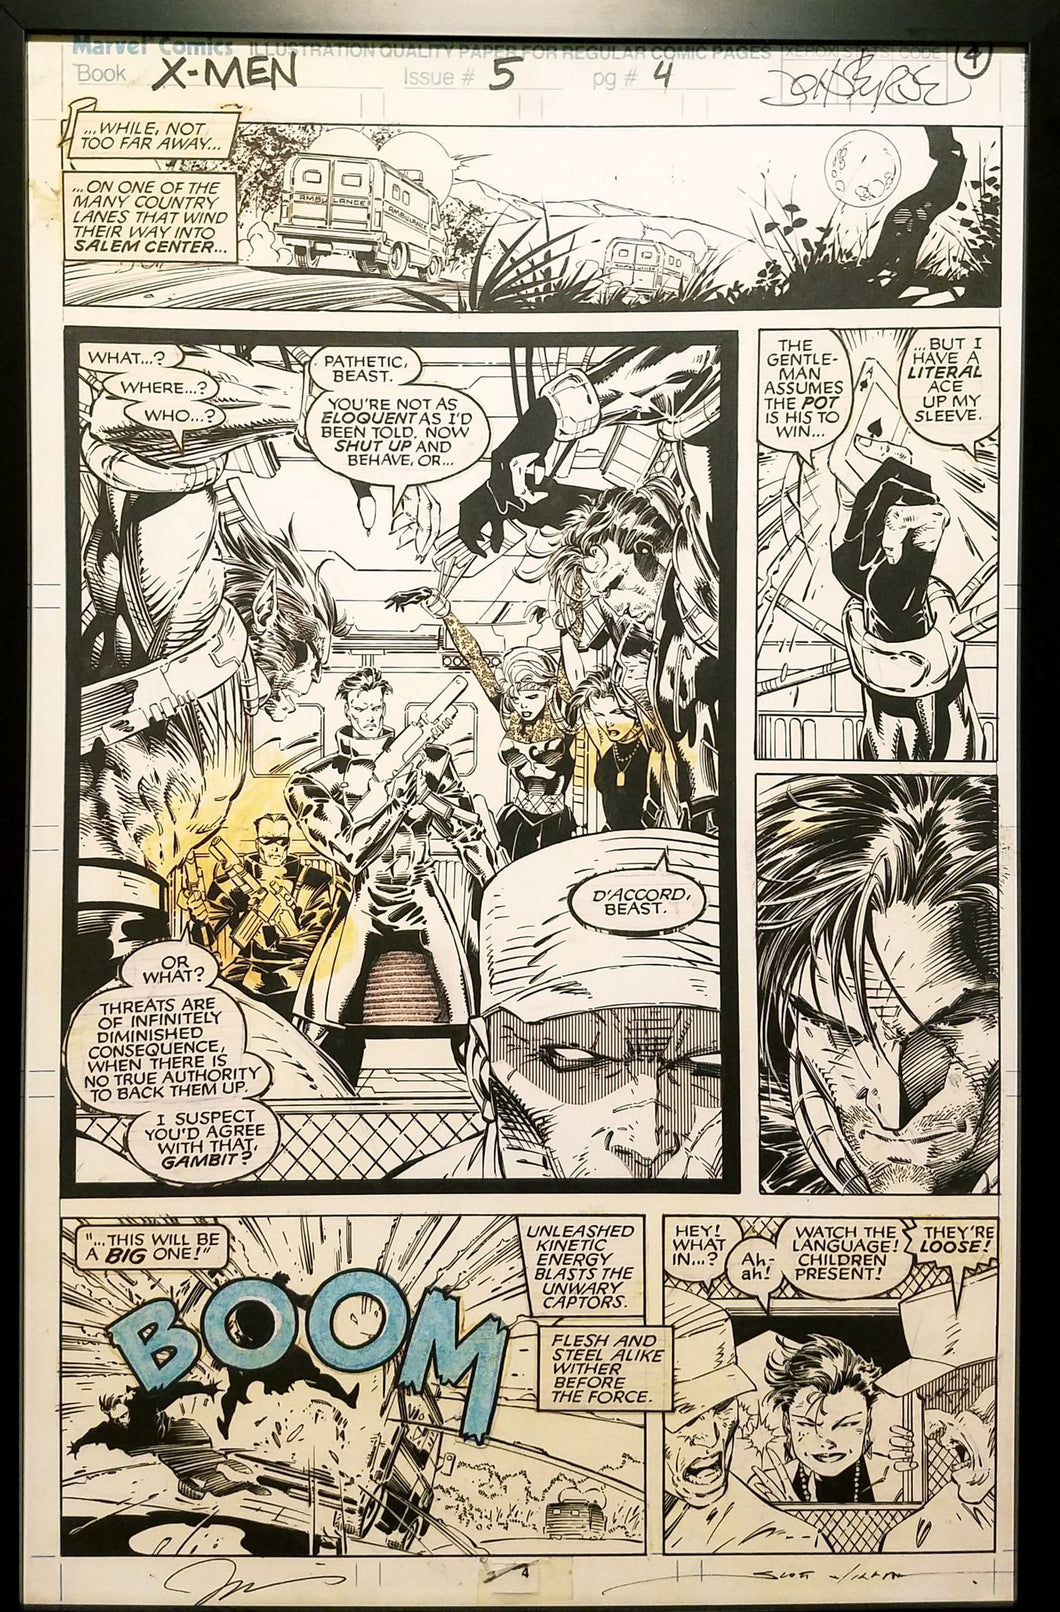 X-Men #5 pg. 4 Gambit Jim Lee 11x17 FRAMED Original Art Poster Marvel Comics